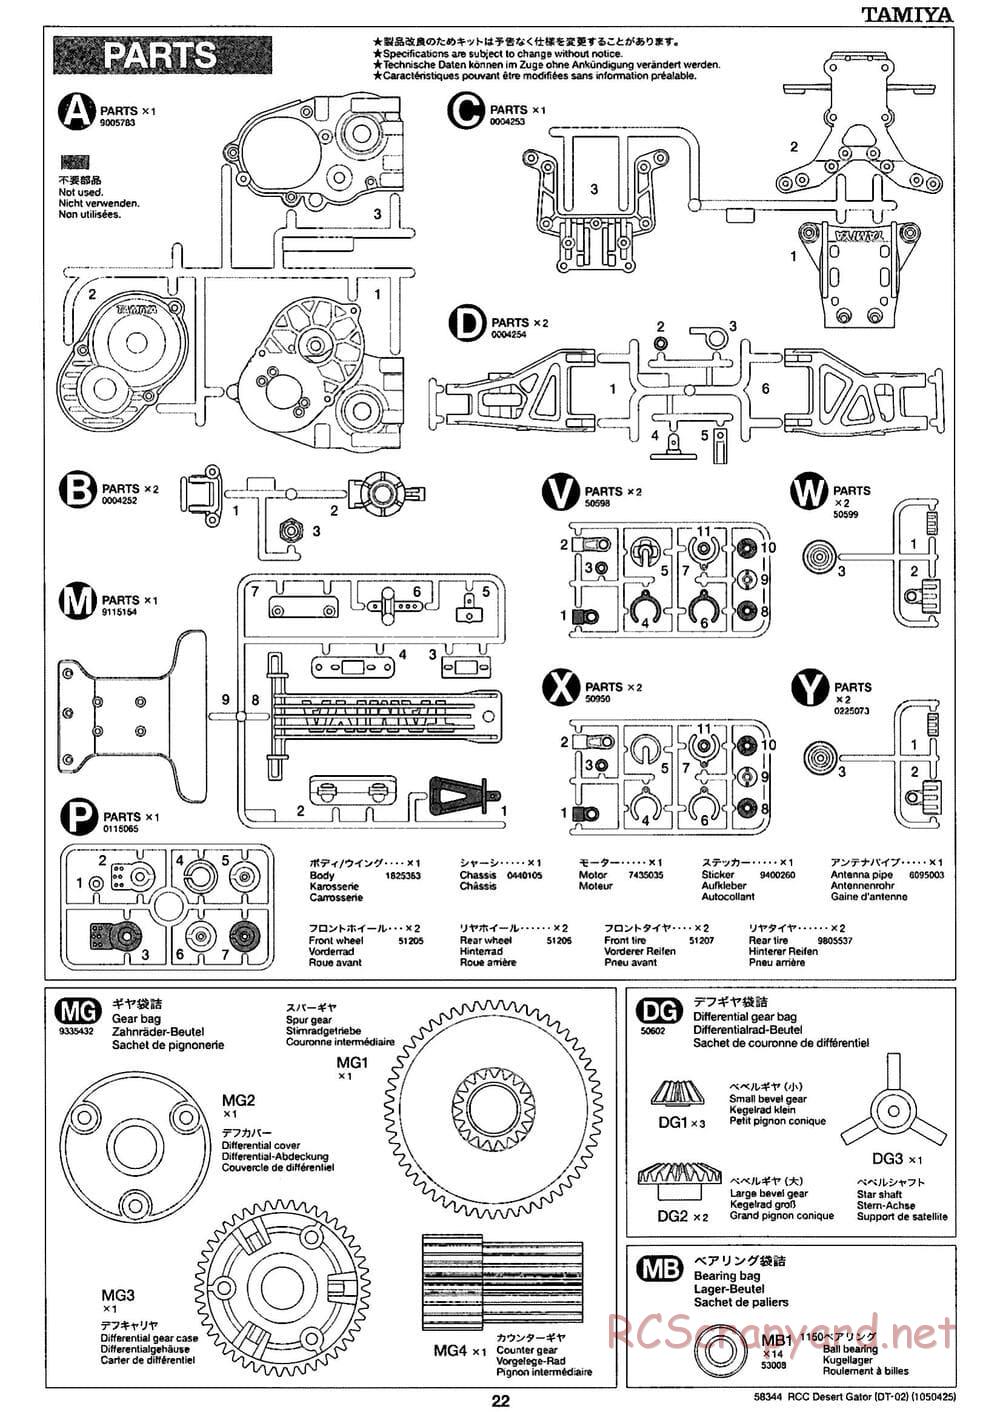 Tamiya - Desert Gator Chassis - Manual - Page 22